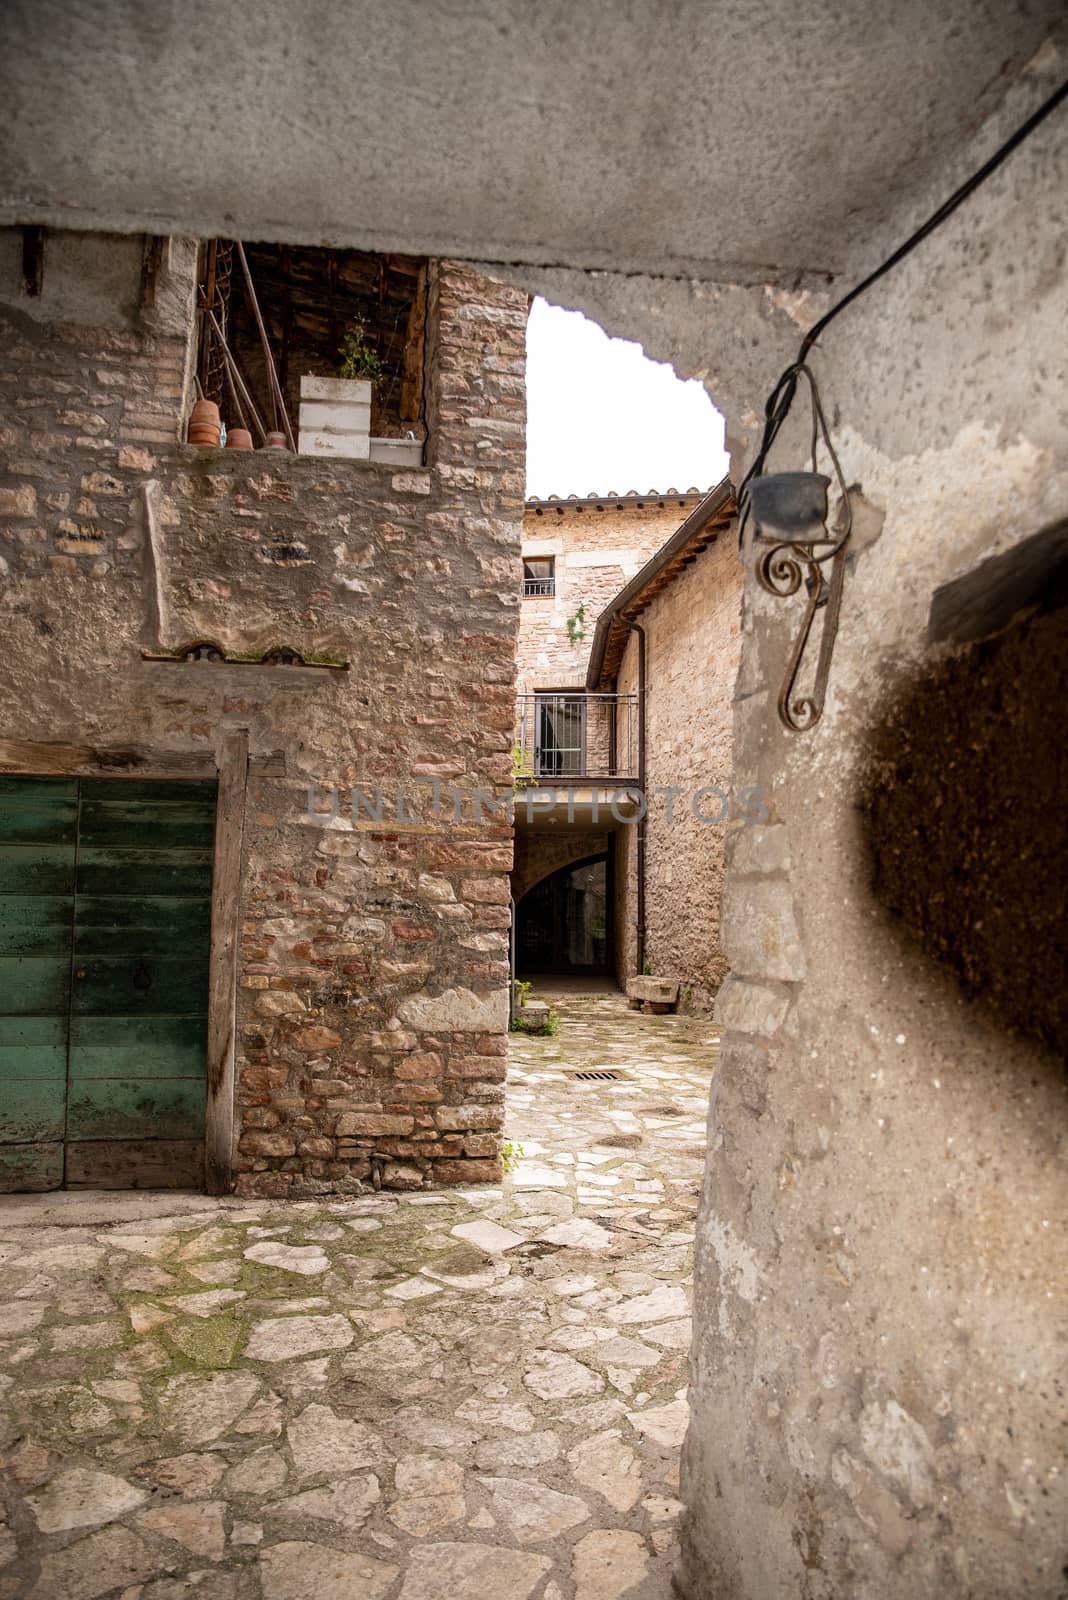 PORZANO,UMBRIA, ITALY MAY 09 2020:Porzano STATE HISTORICAL ROUTES IN THE WALLS